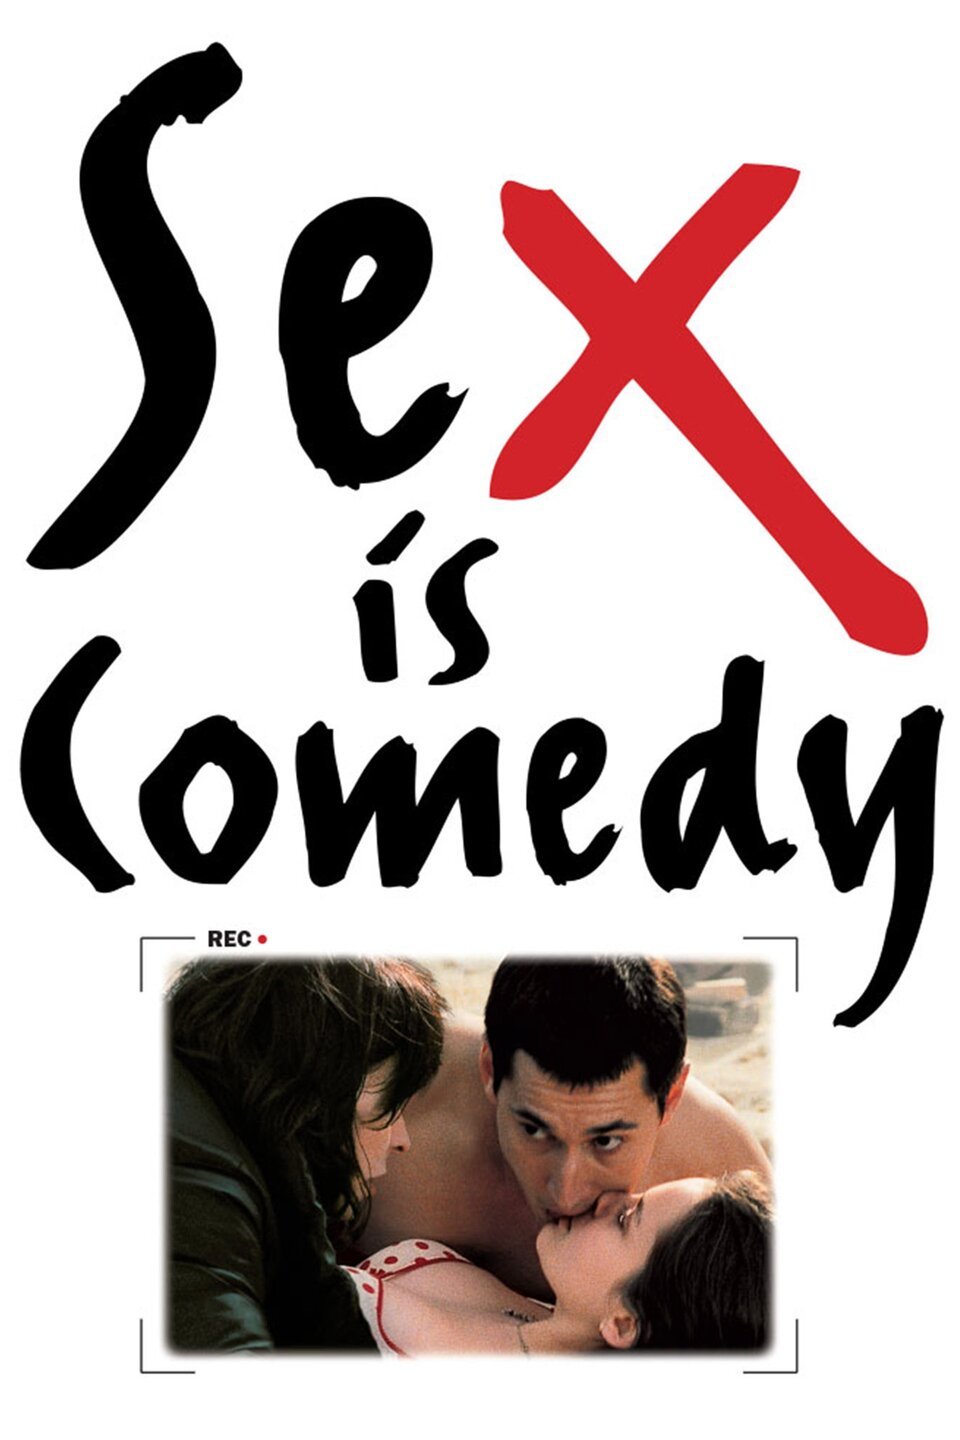 Jojojo erotic comedy movie